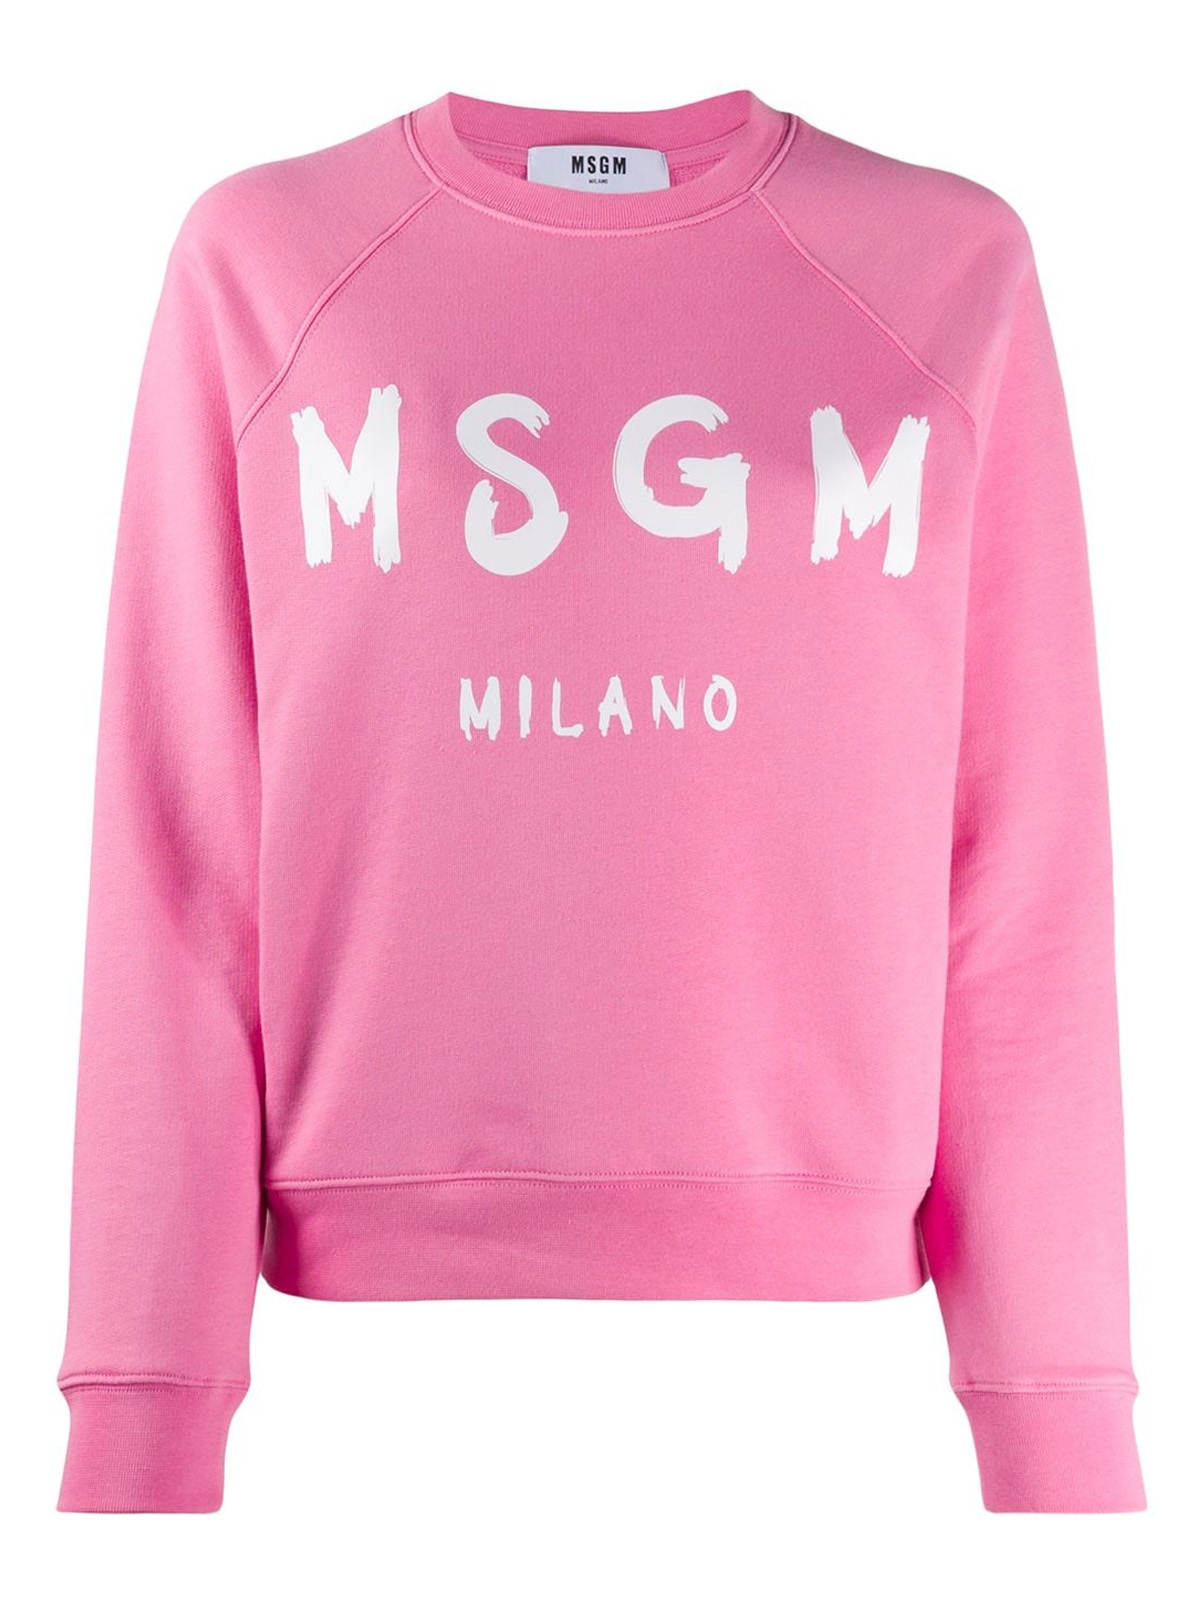 Sweatshirts & Sweaters M.S.G.M. - Brushed logo sweatshirt in pink ...